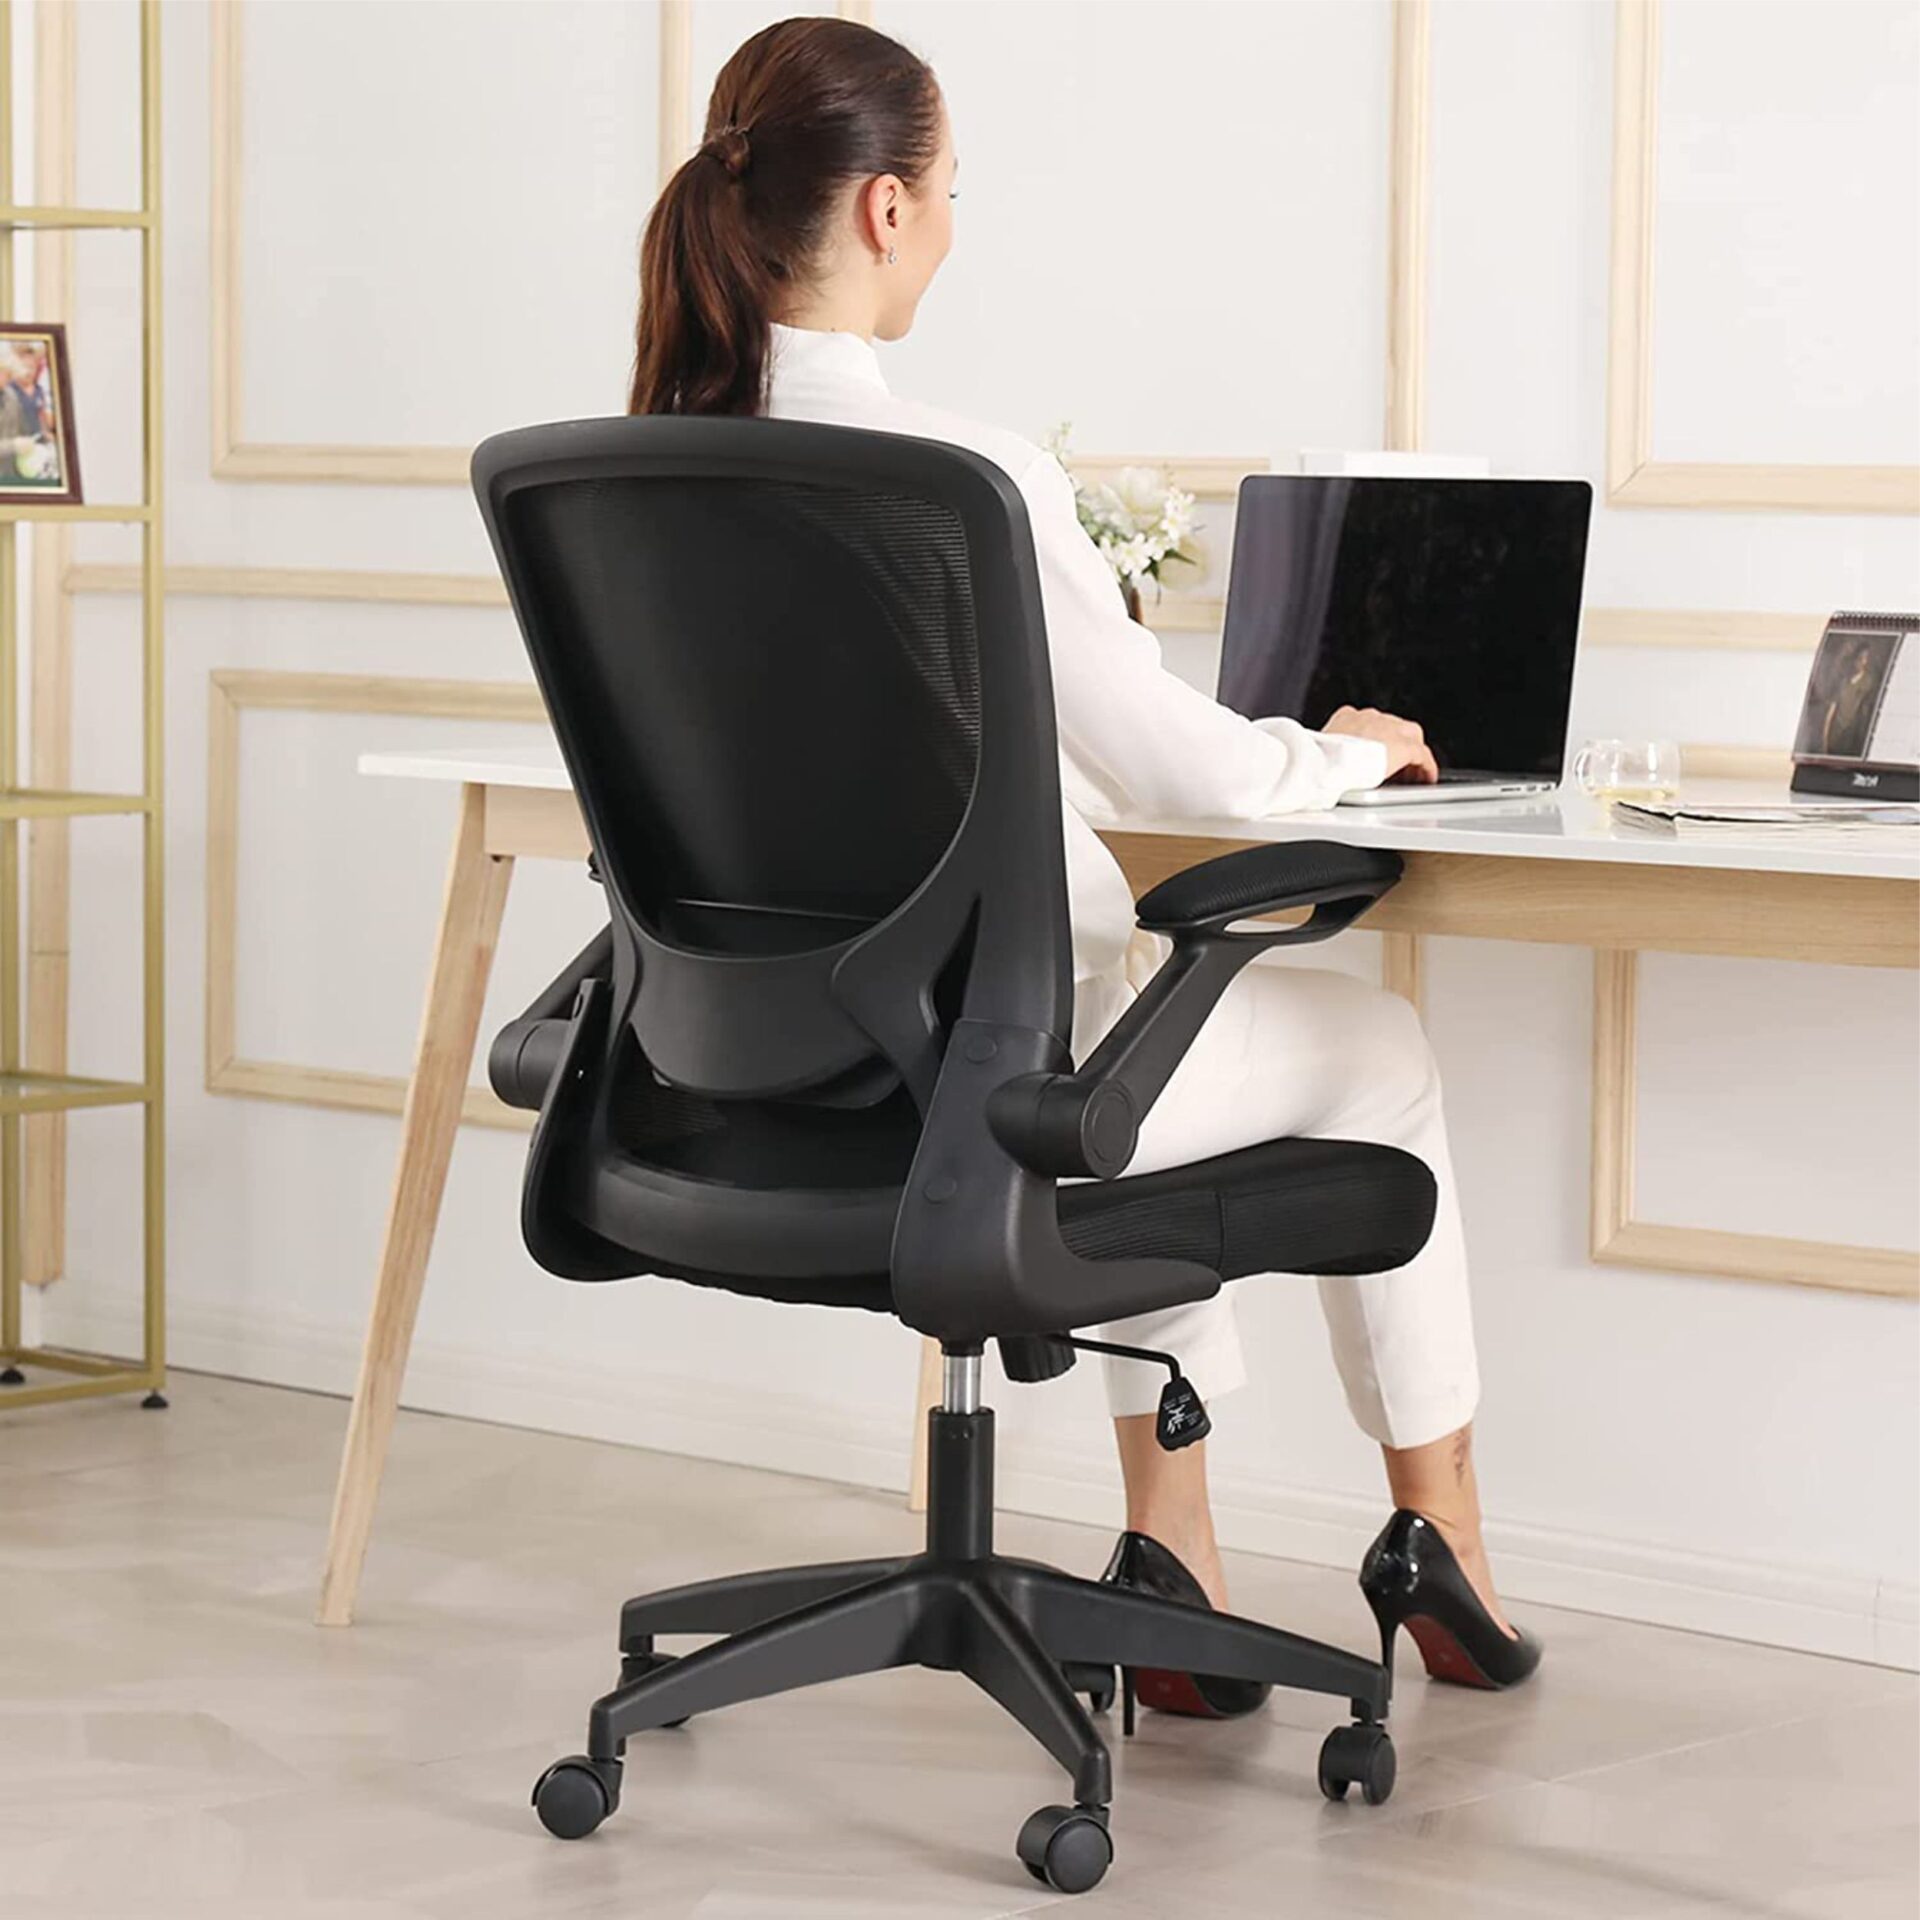 Ergonomic office chair providing proper lumbar support